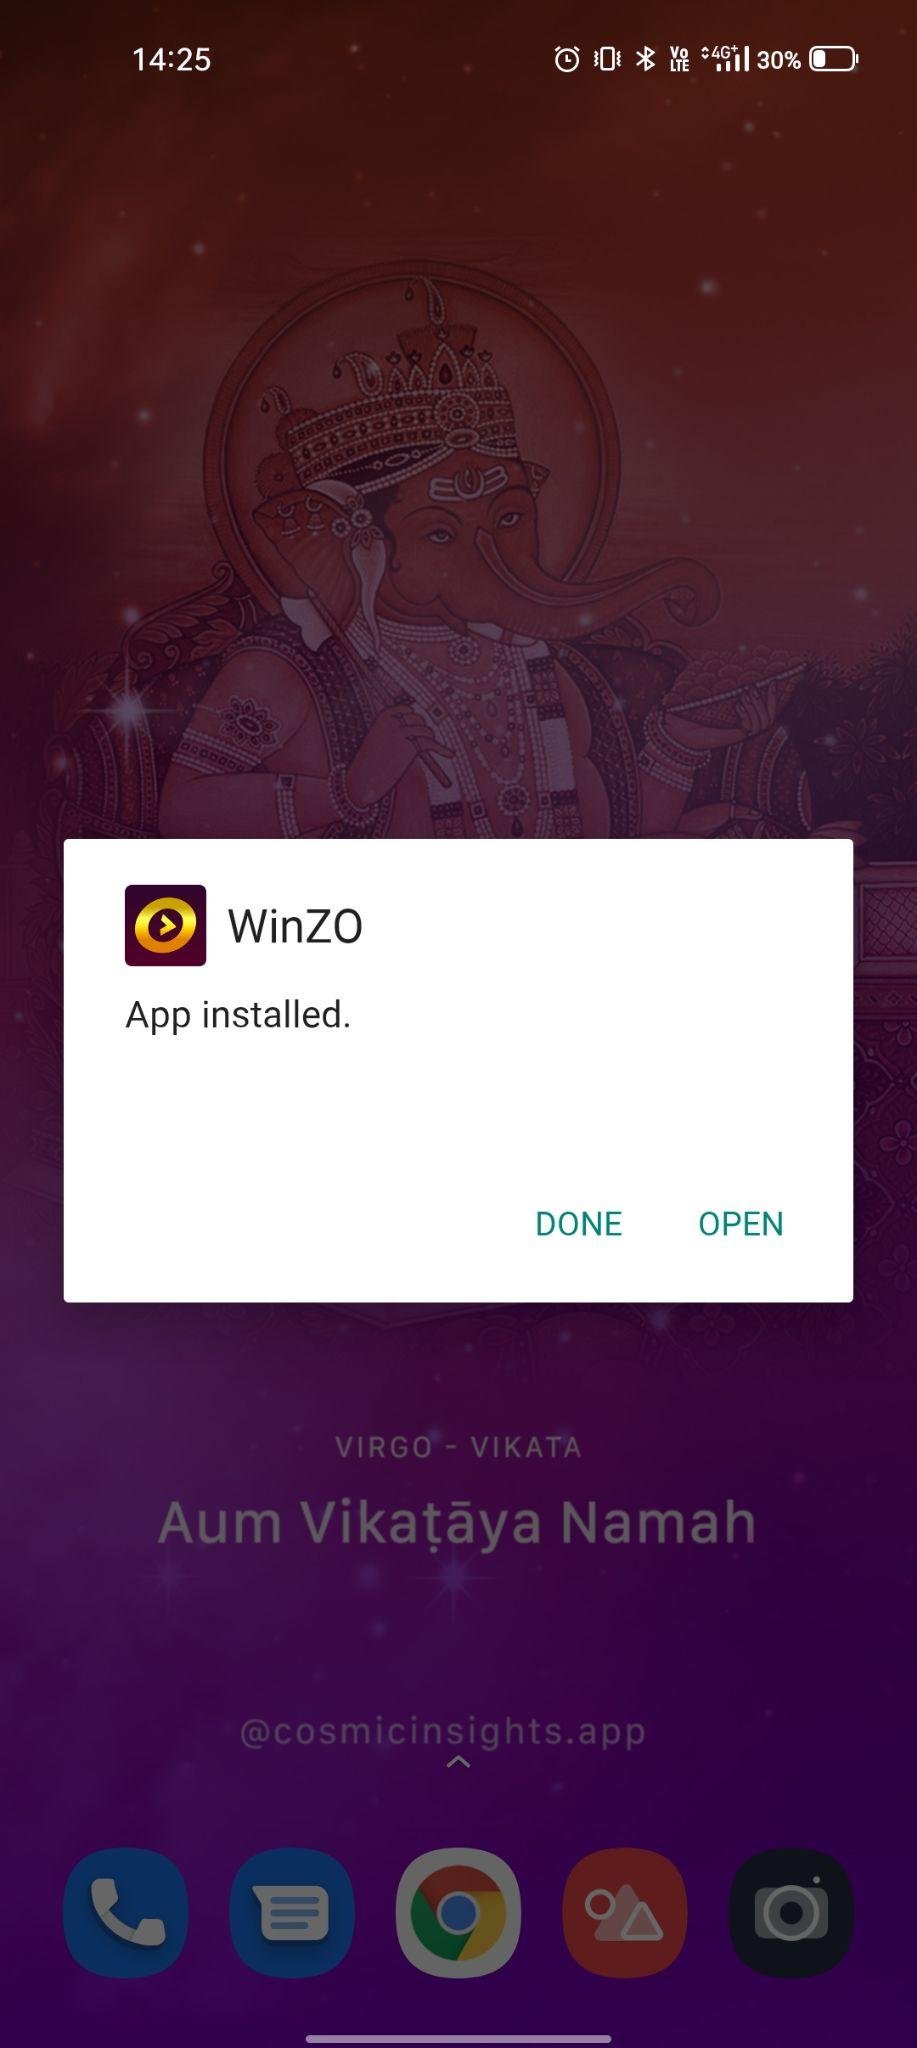 Winzo Apk installed